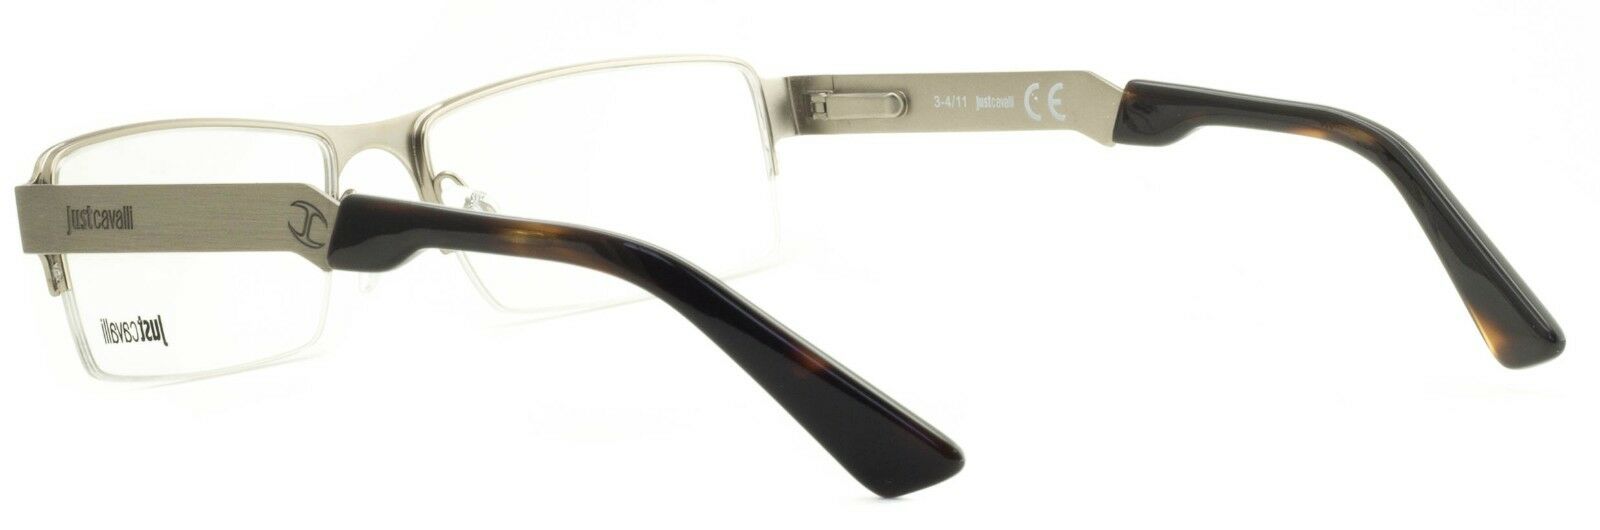 JUST CAVALLI JC450 col 048 FRAMES NEW Glasses RX Optical Eyewear Eyeglasses-BNIB